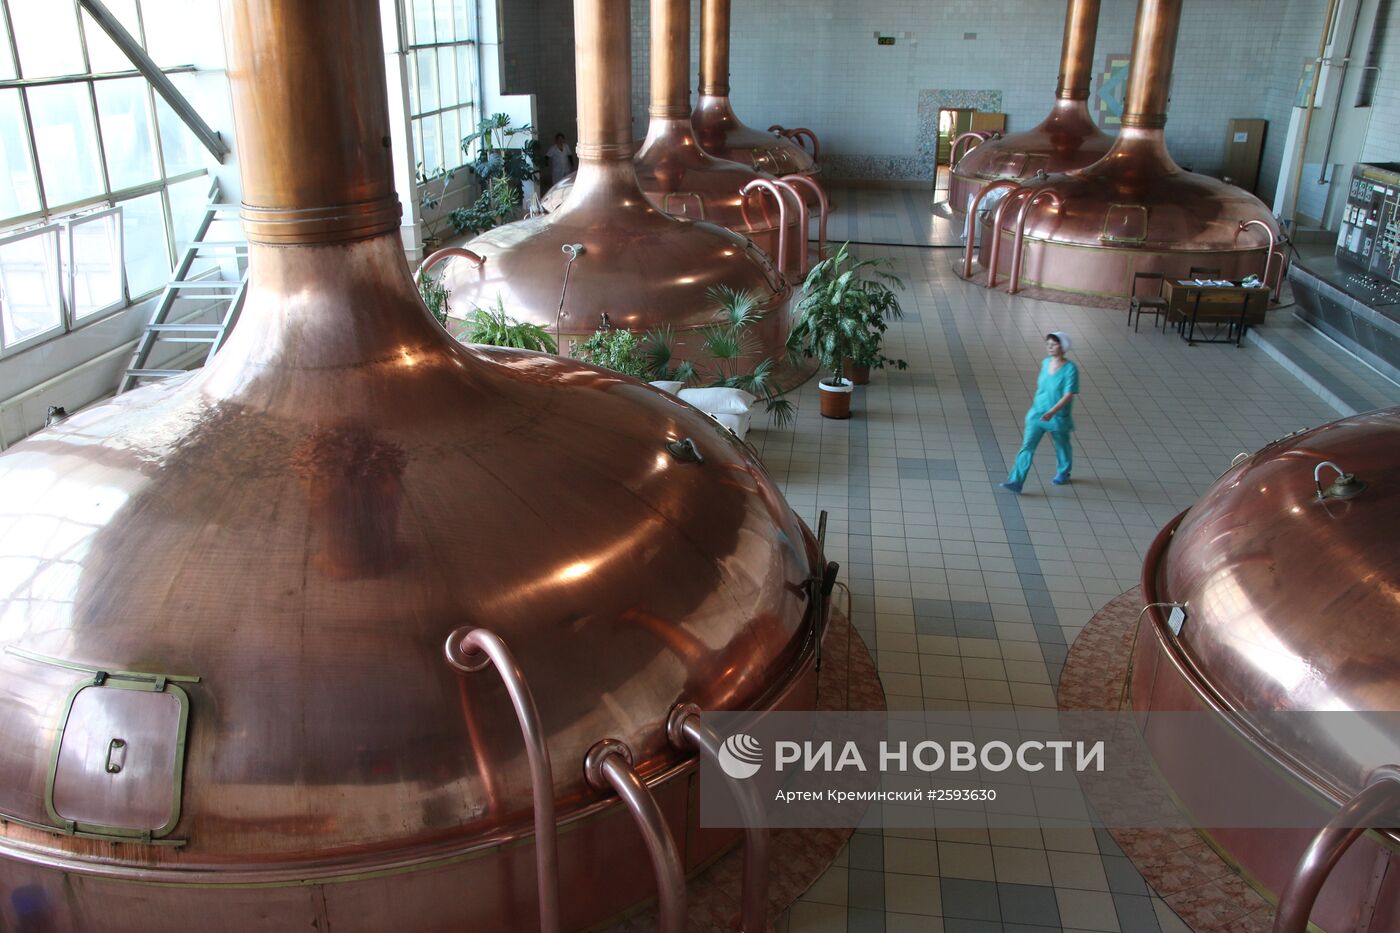 Производство пива на комбинате "Крым" в Симферополе